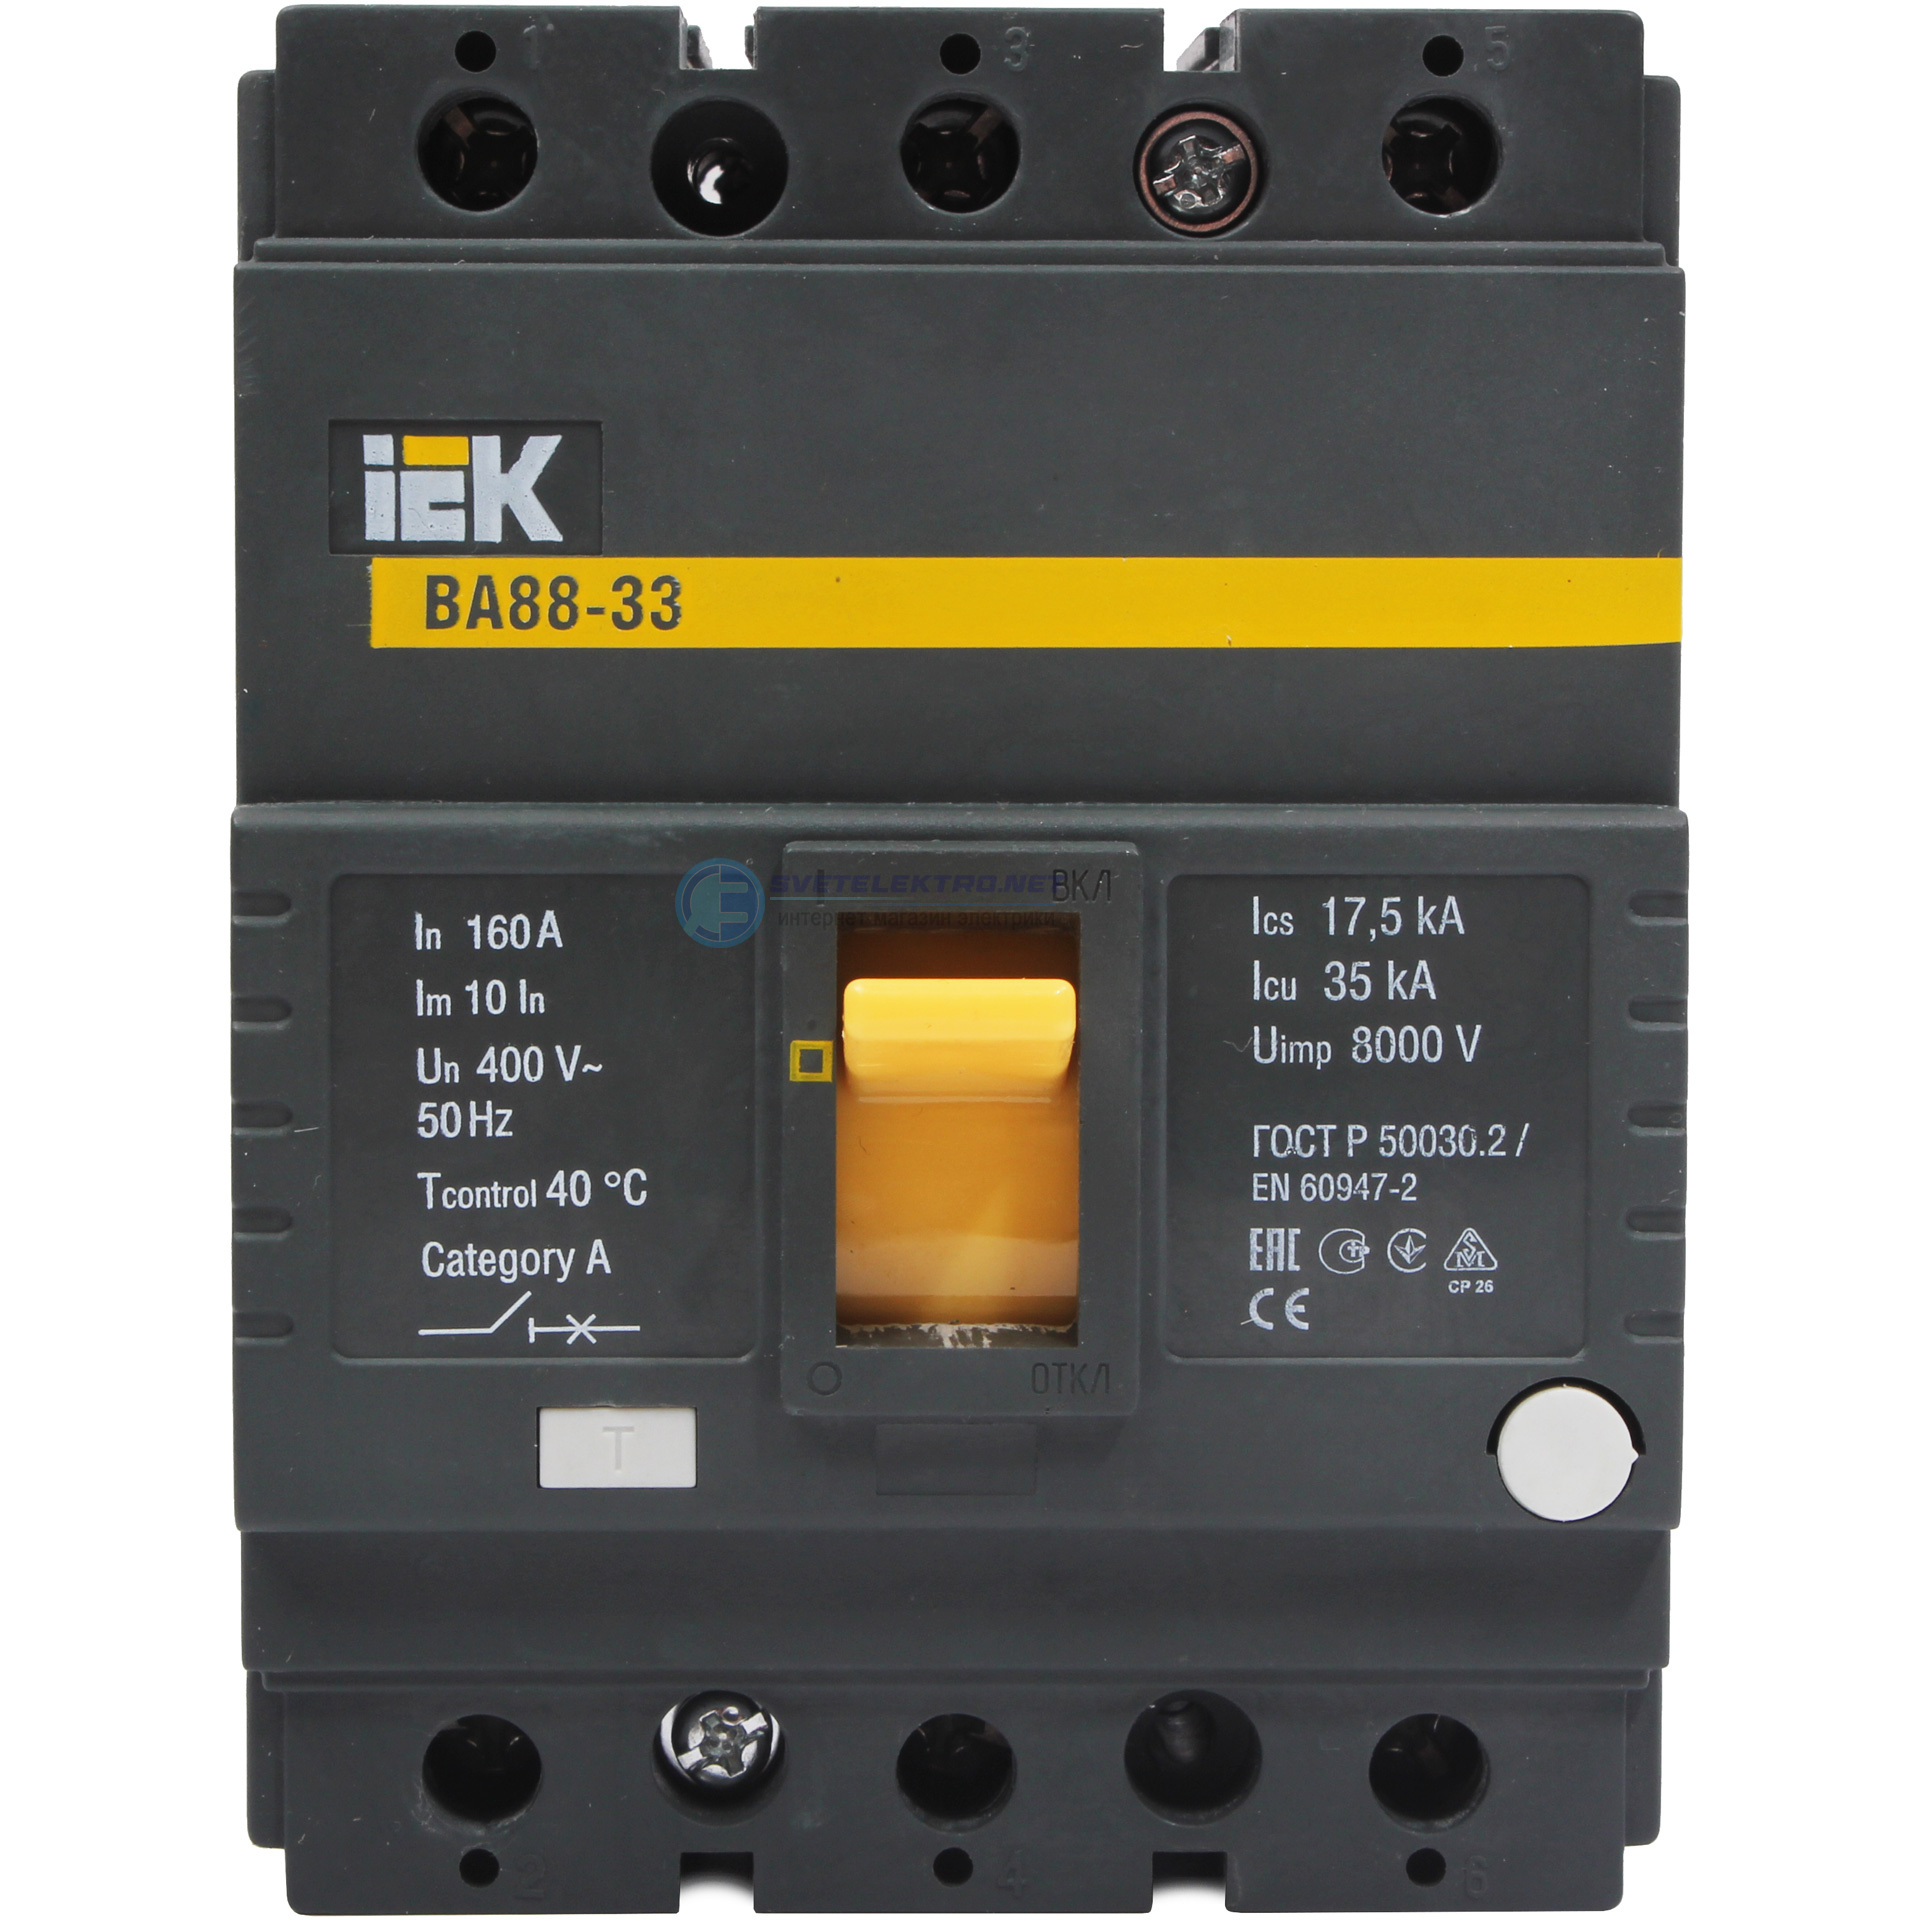 Автоматический выключатель iek ва 88. Ba88-33 IEK. Выключатель ва88-33 3p 160а. Электропривод ed88-35 к ва88-35 (125-250 а). IEK 160а с регулировкой.